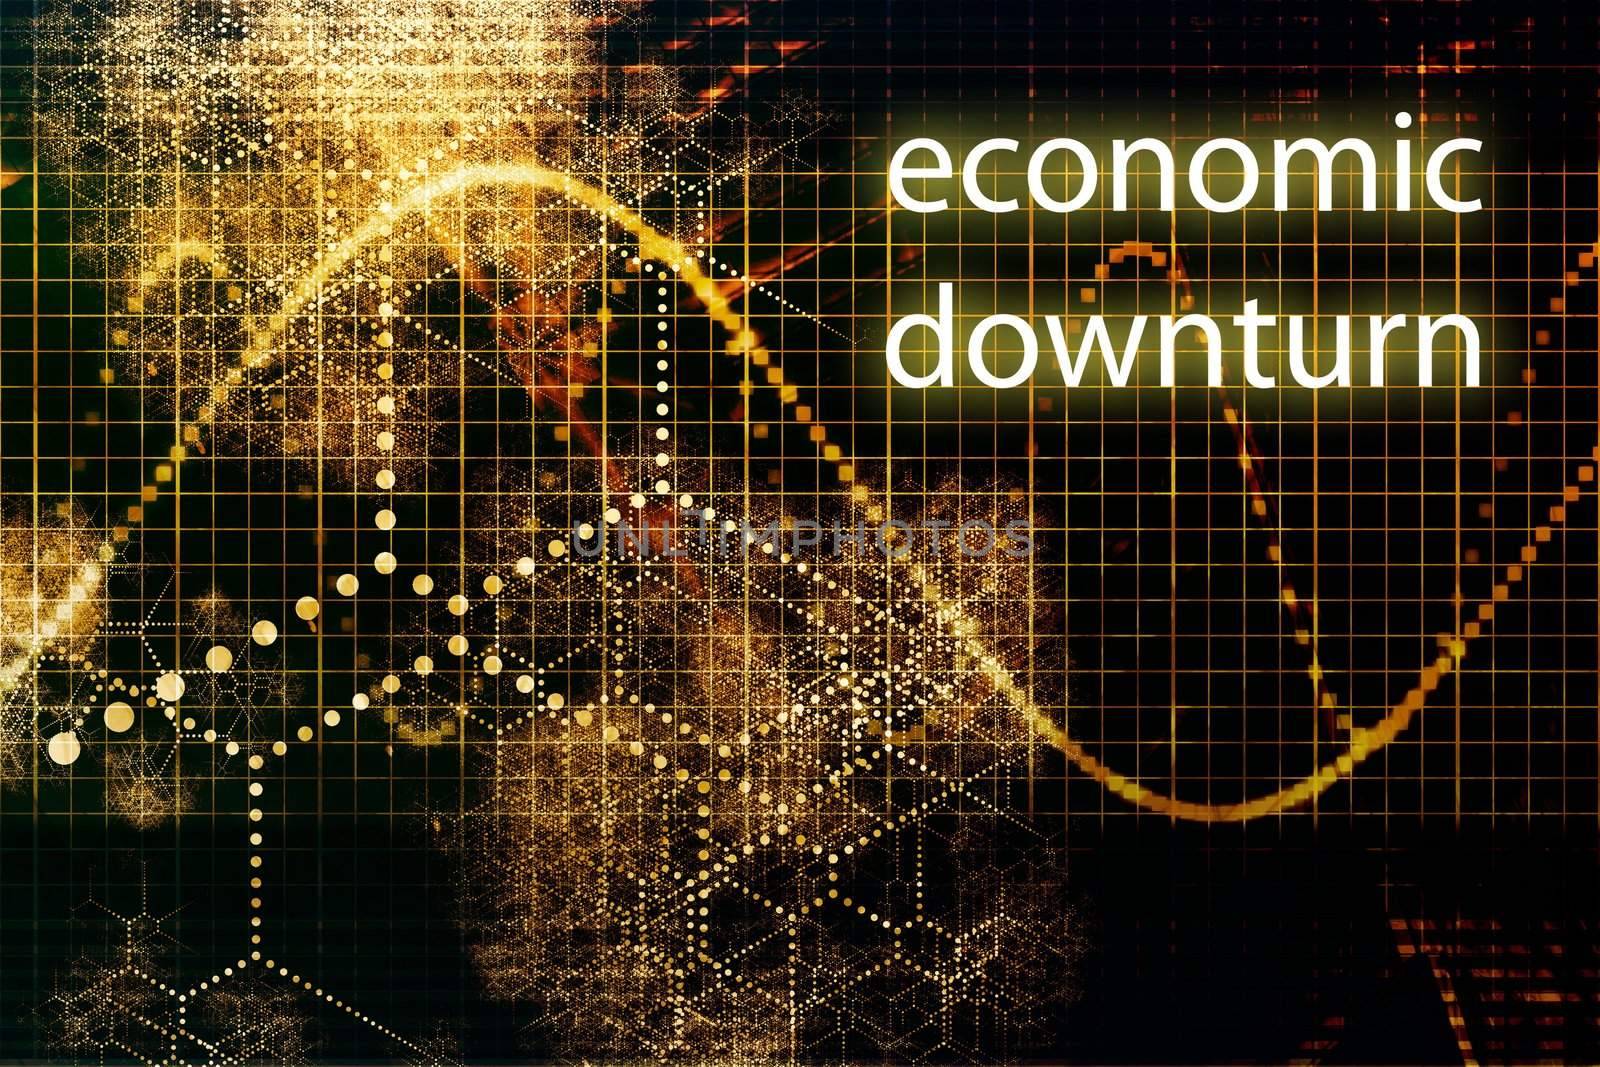 Economic Downturn by kentoh